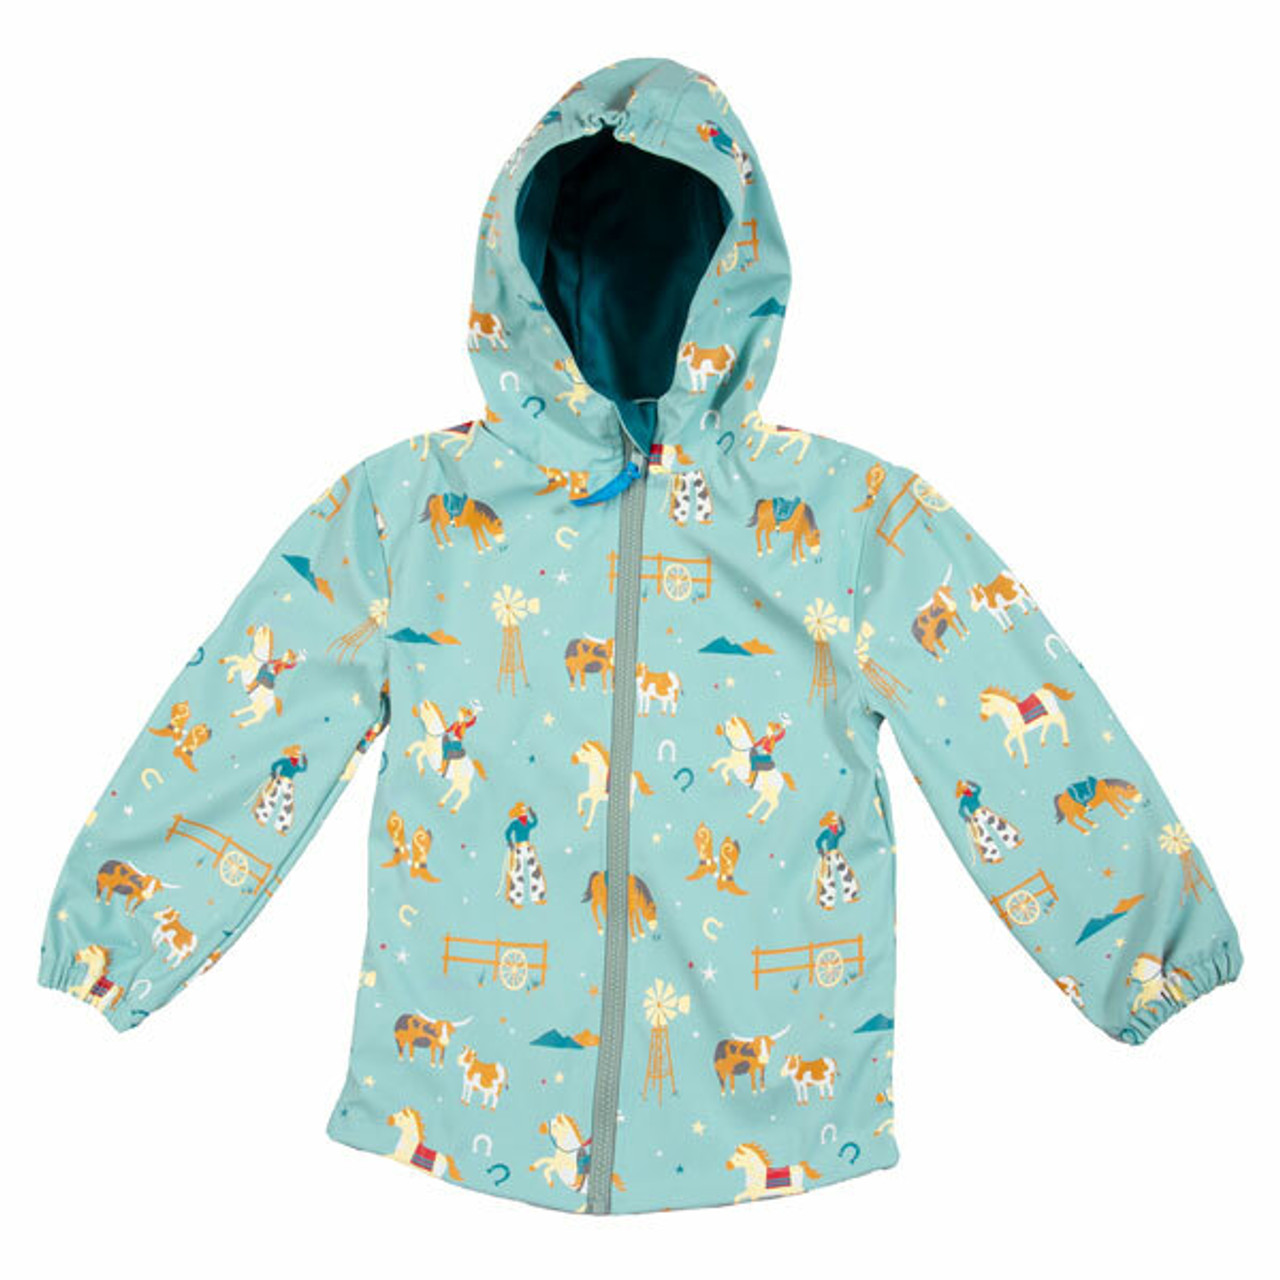 Amazon.com: Carter's Boys Favorite Rainslicker Jacket Raincoat (Black Camo,  18 Months) : Clothing, Shoes & Jewelry